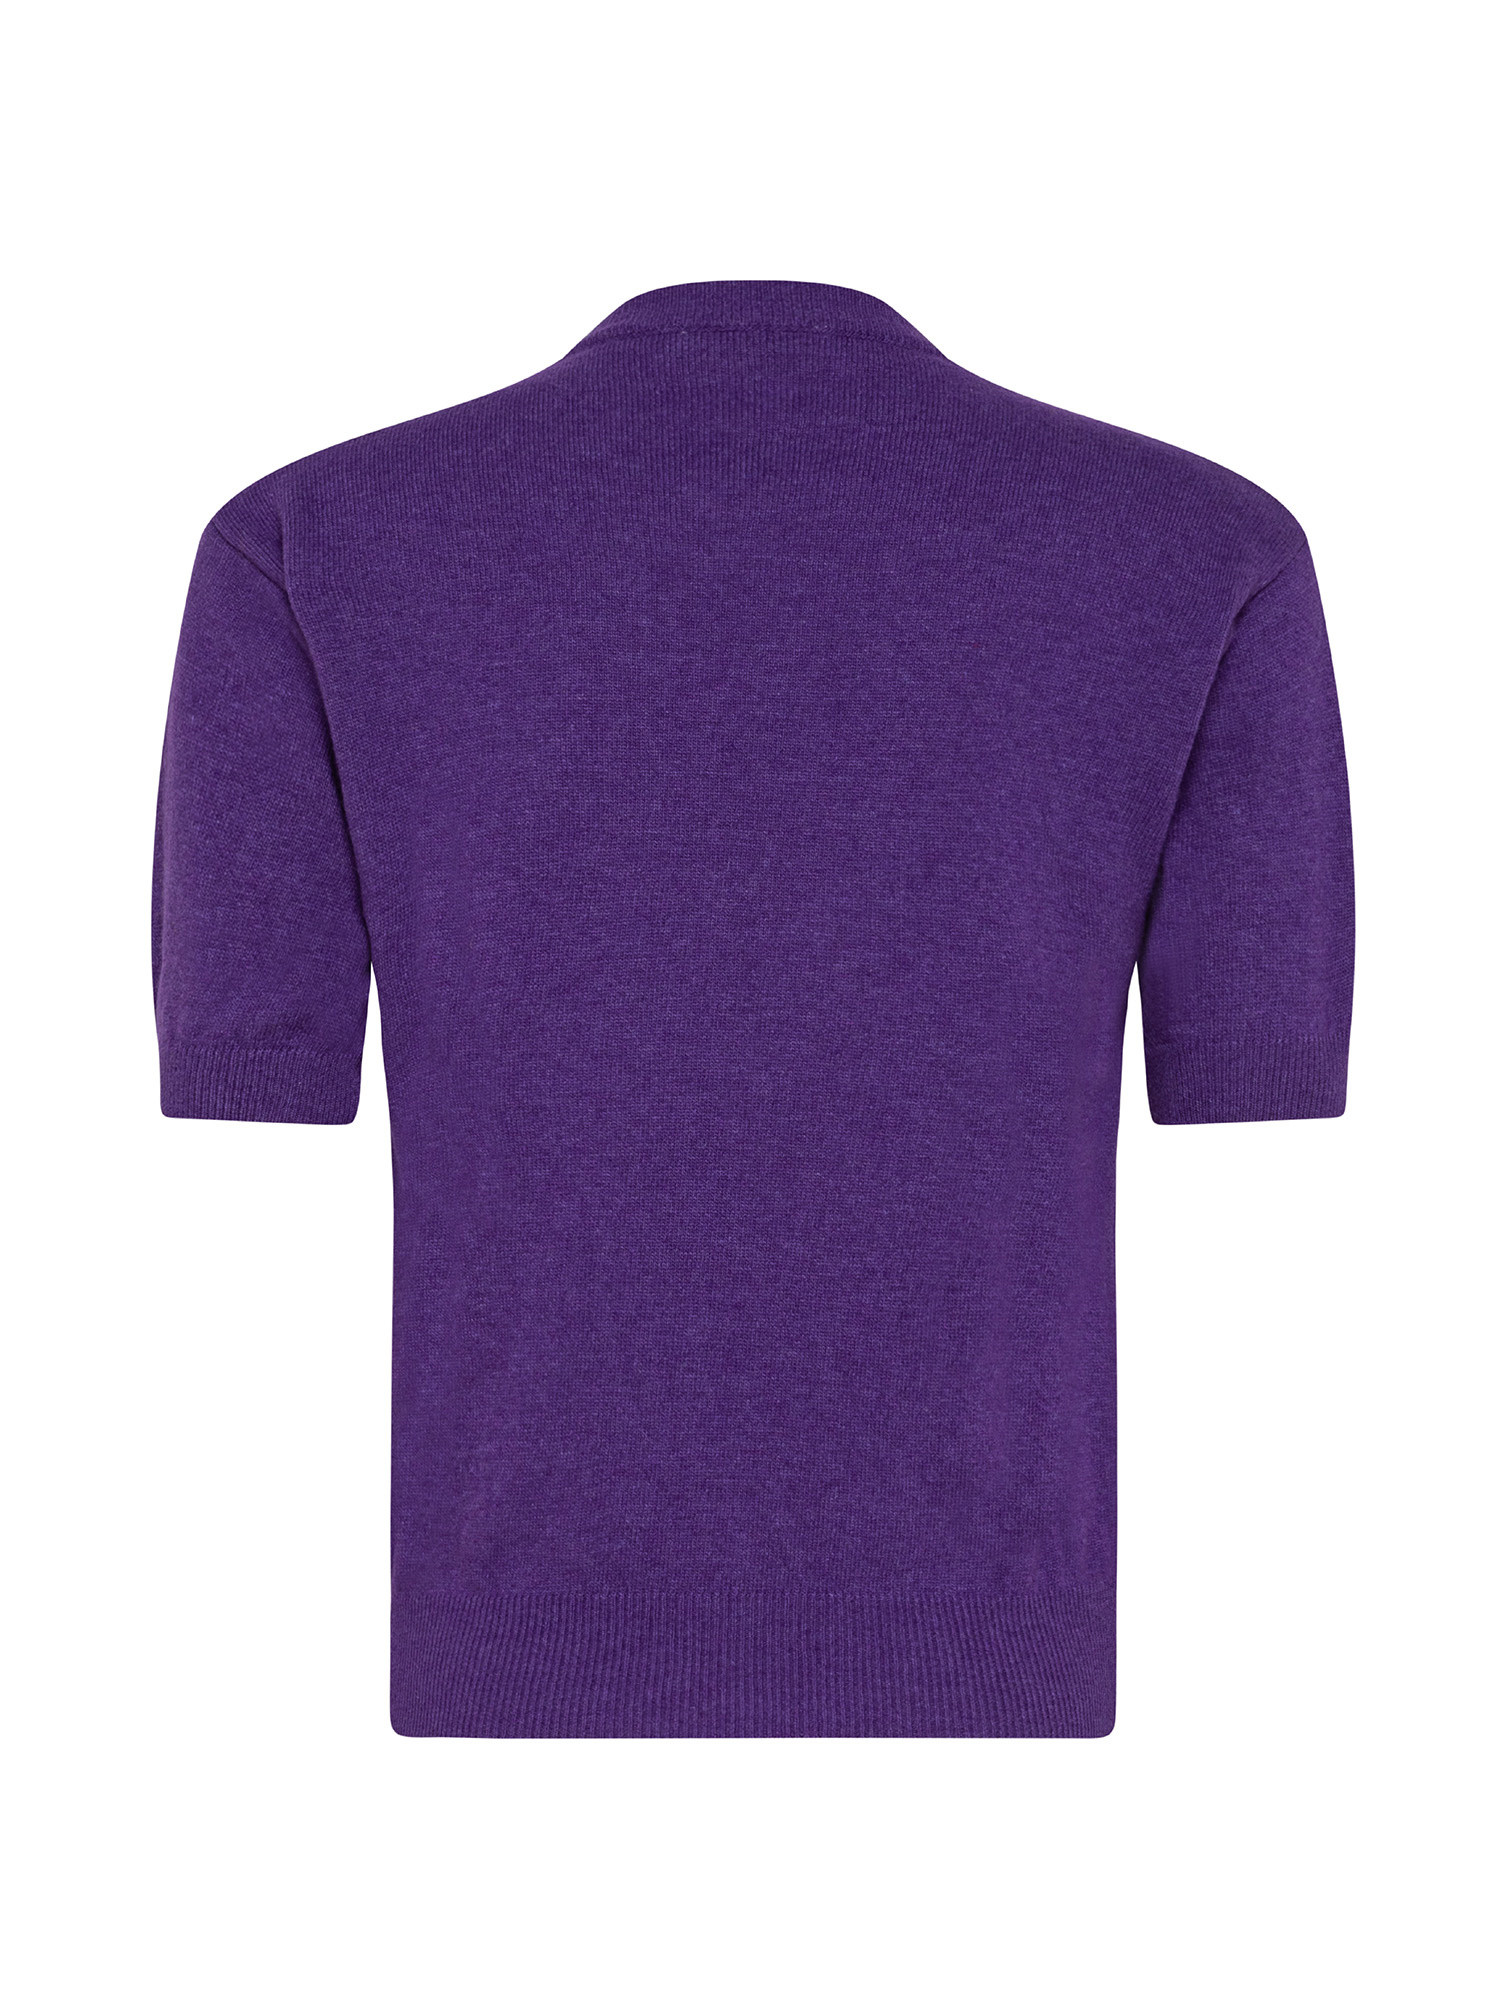 K Collection - Crewneck sweater, Purple, large image number 1